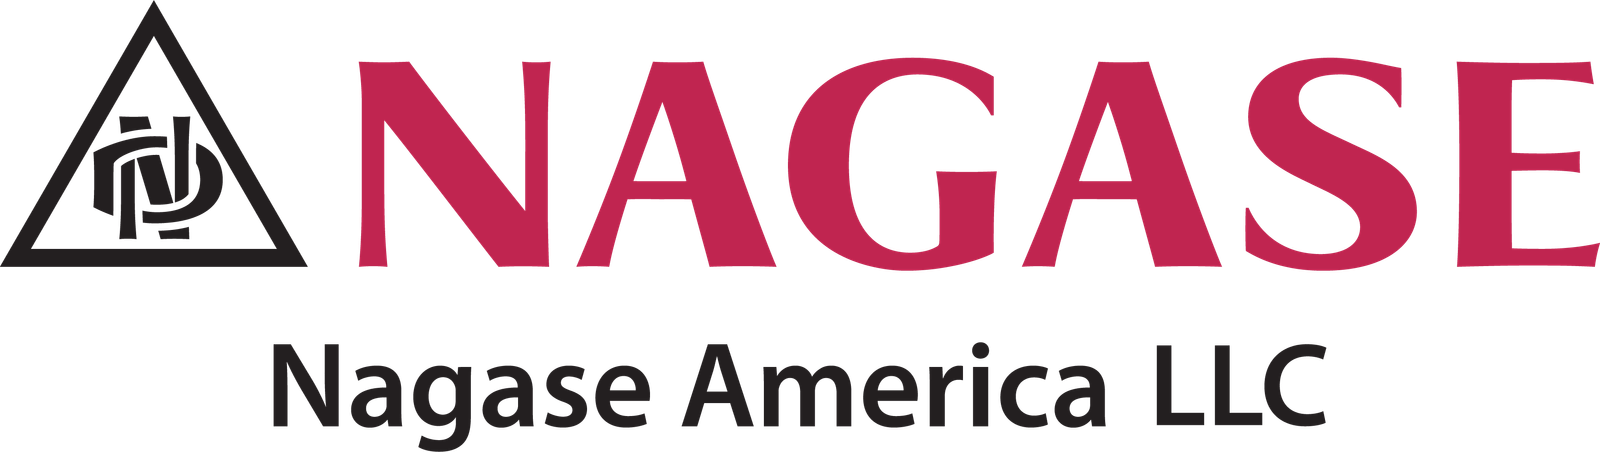 Nagase America Corporation